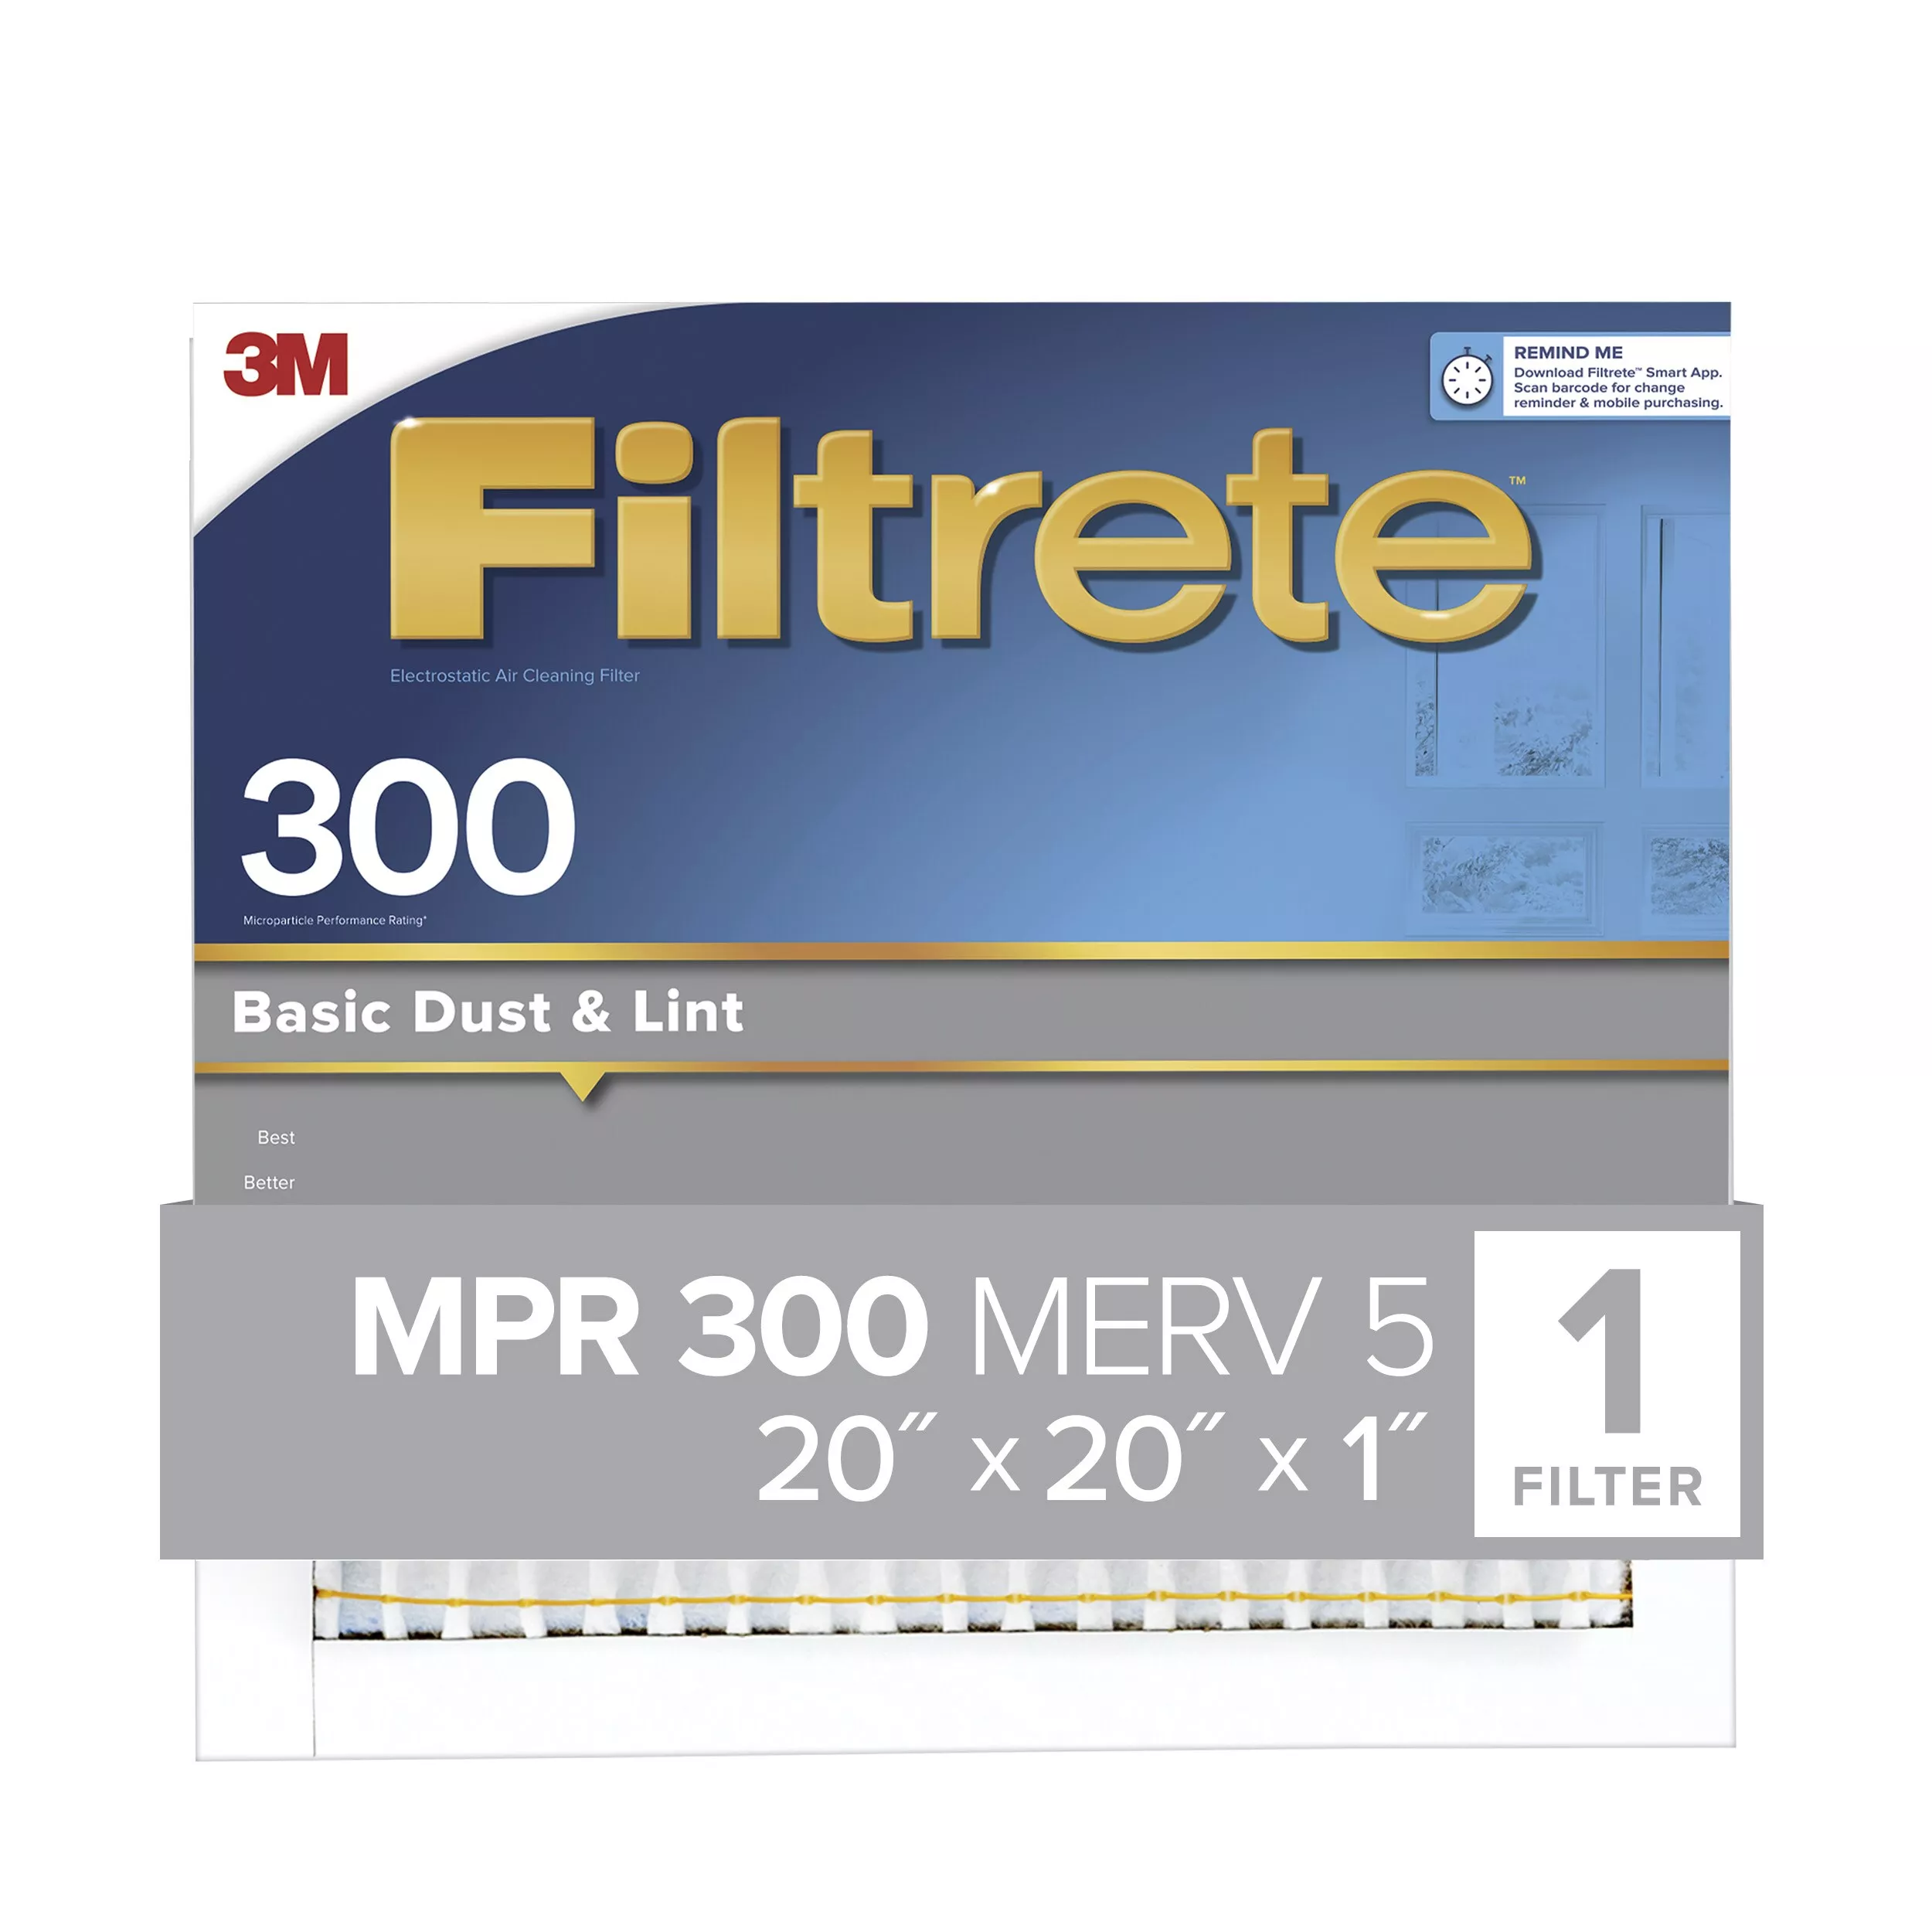 Filtrete™ Basic Dust & Lint Air Filter, 300 MPR, 302-4, 20 in x 20 in x
1 in (50.8 cm x 50.8 cm x 2.5 cm)